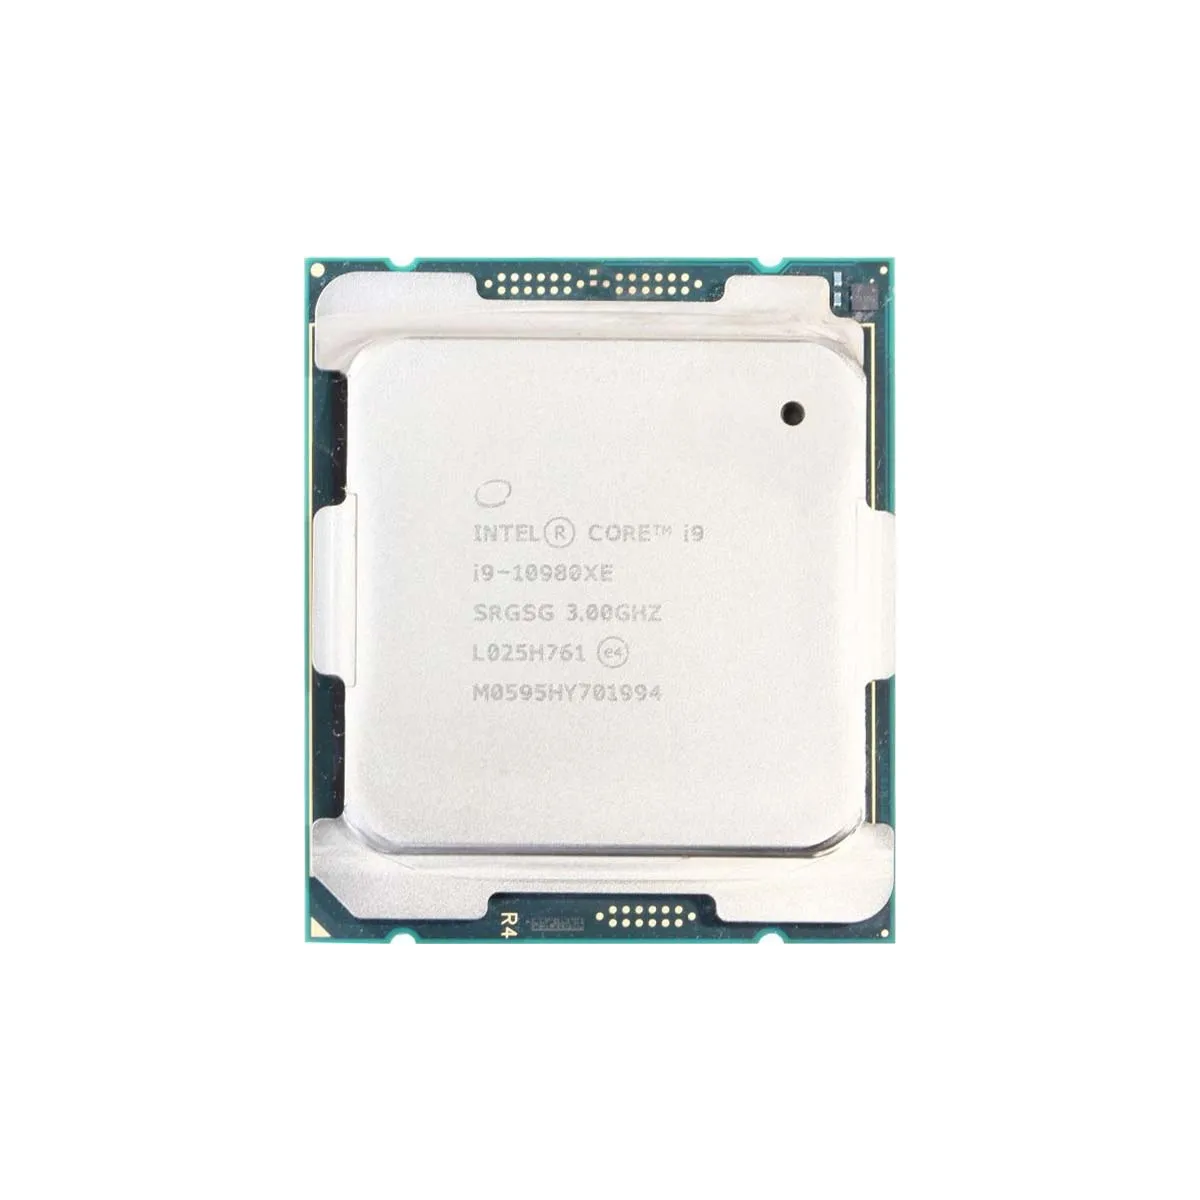 Intel Core i9-10980XE (SRGSG) - 18-Core 3.00GHz LGA2066 24.75M 165W CPU